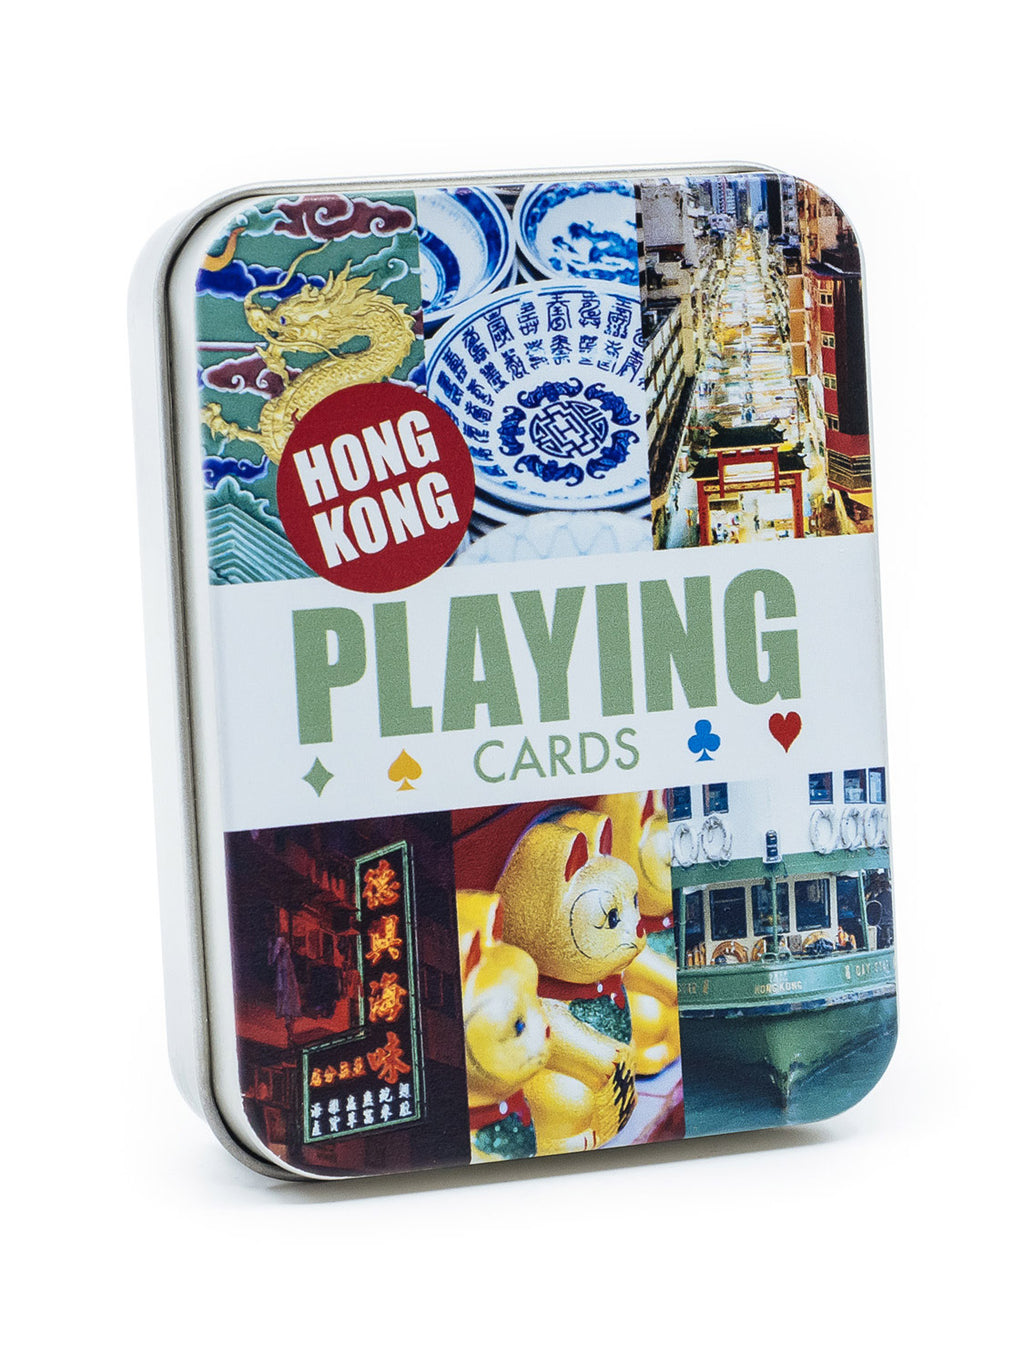 Hong Kong Playing Cards - Classic Card Game